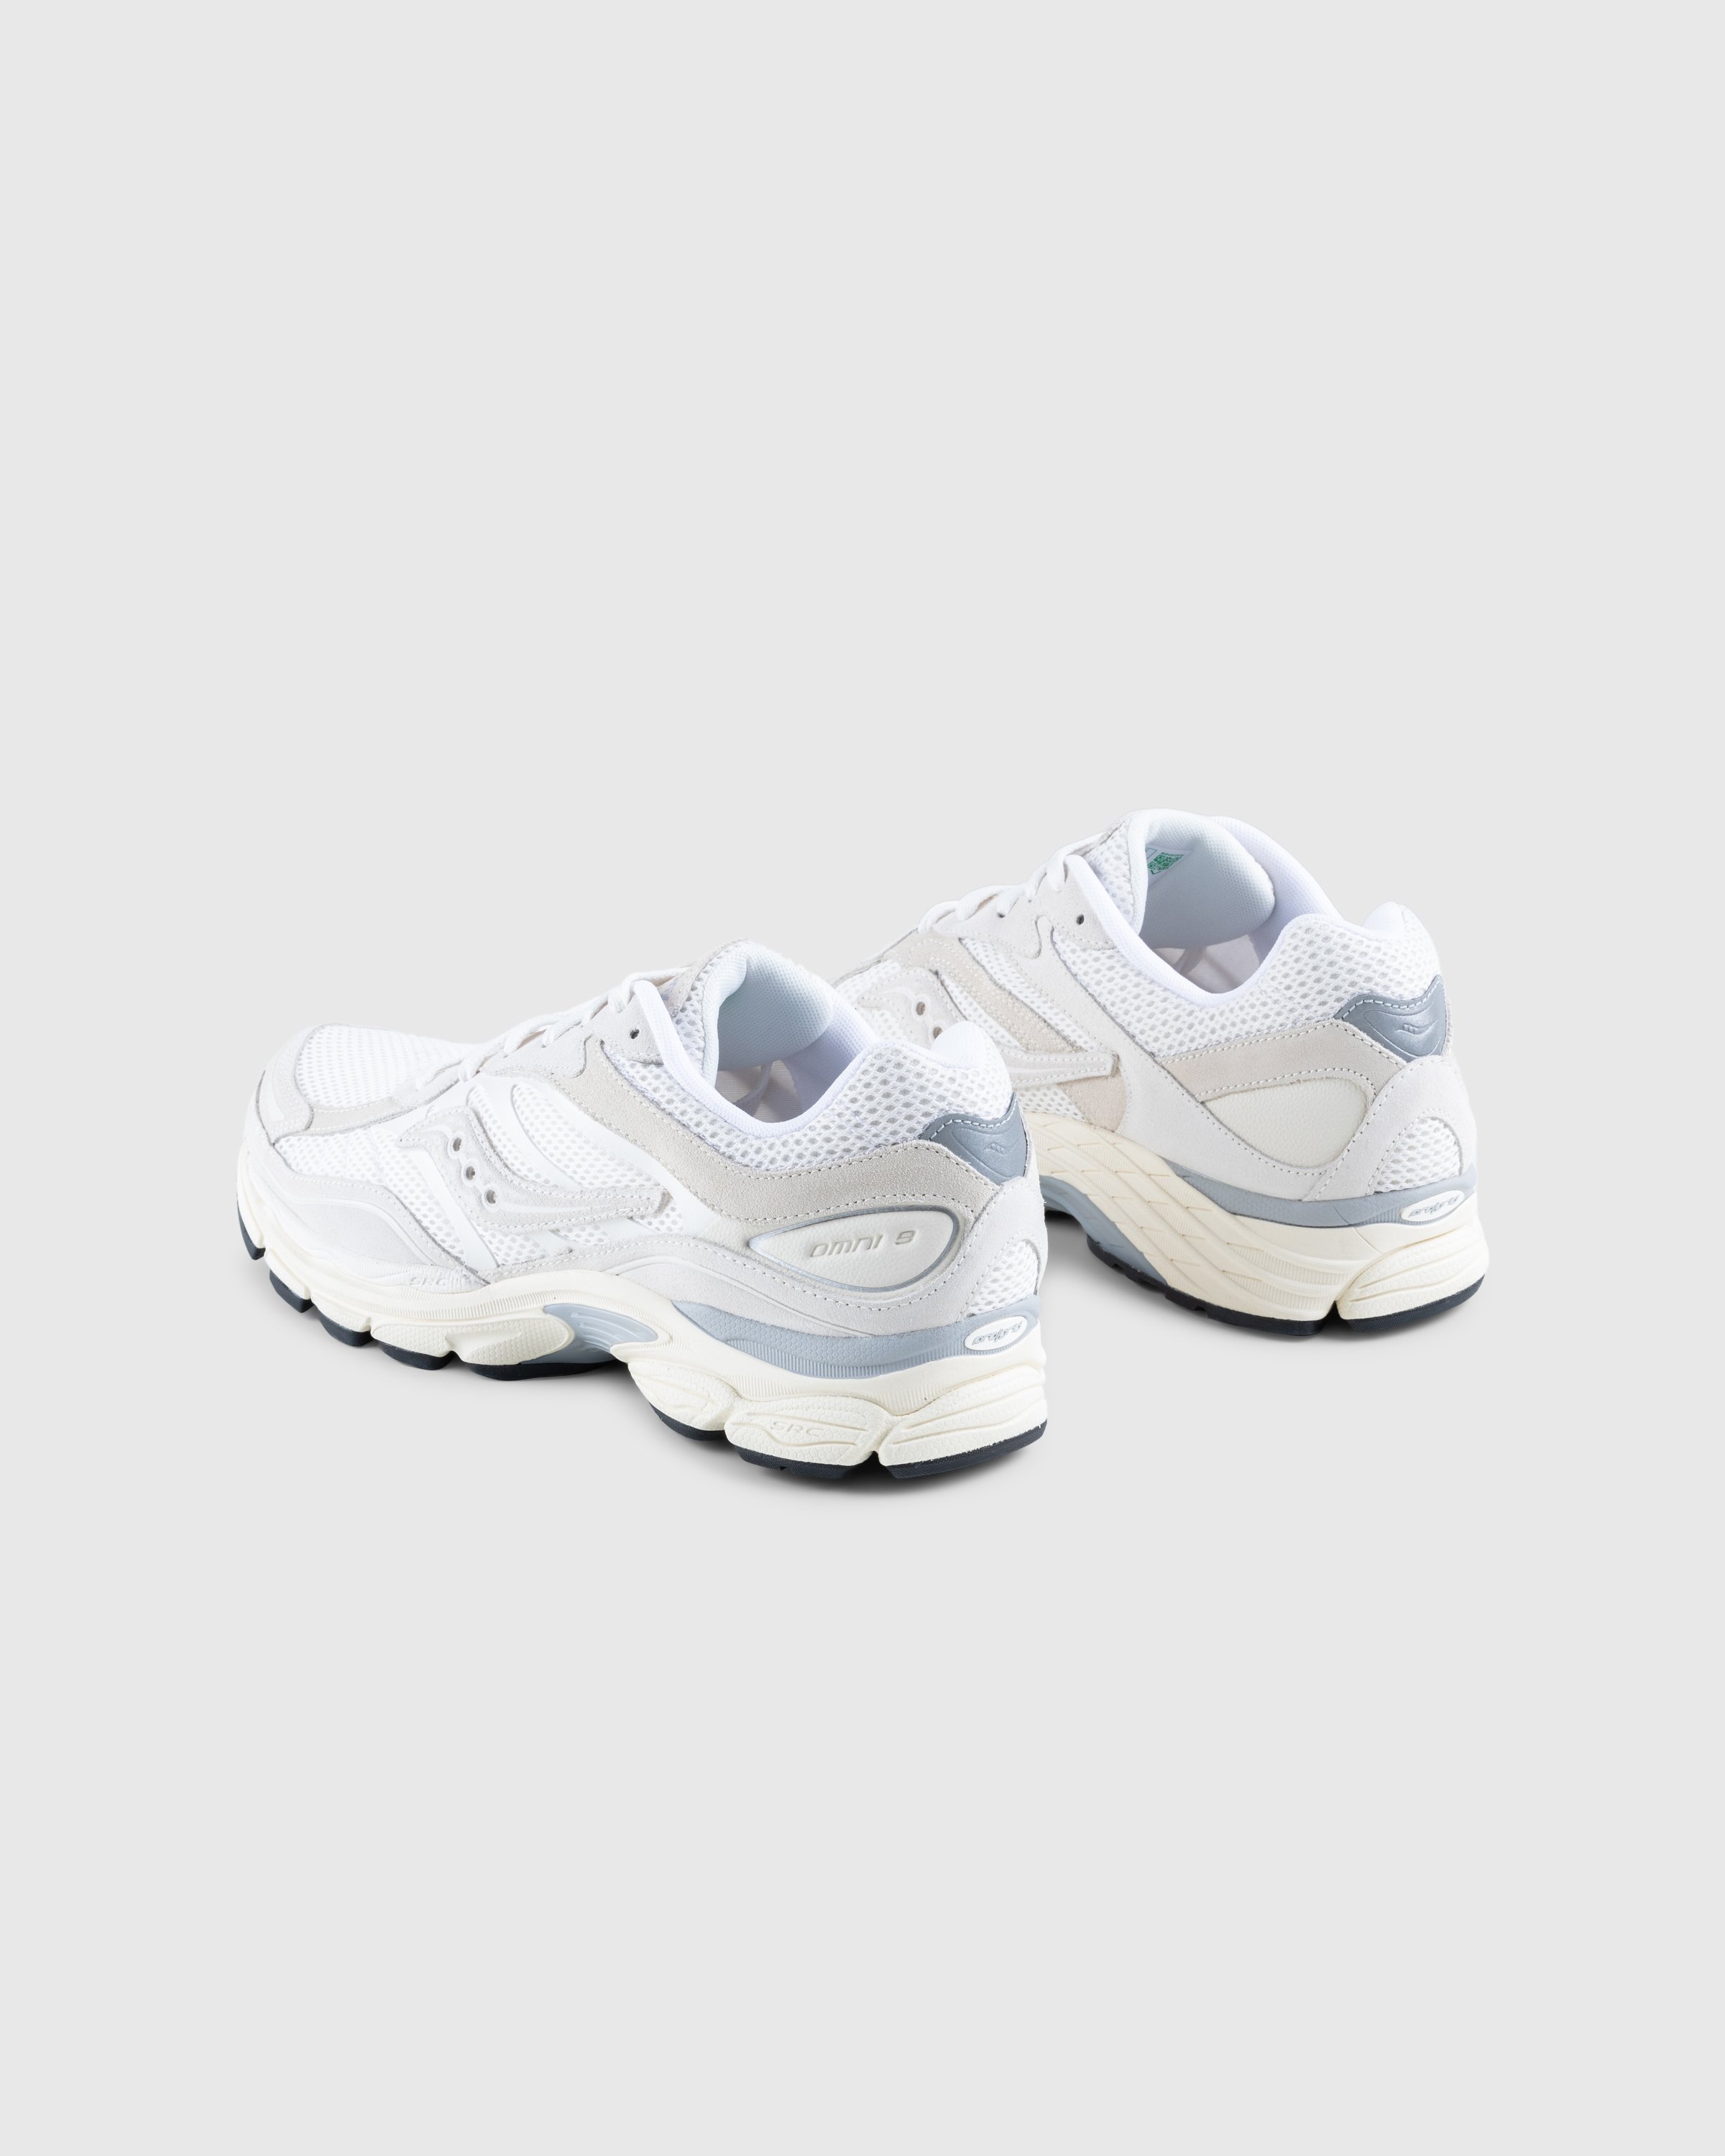 Saucony - ProGrid Omni 9 White/Off-White - Footwear - WHITE - Image 4